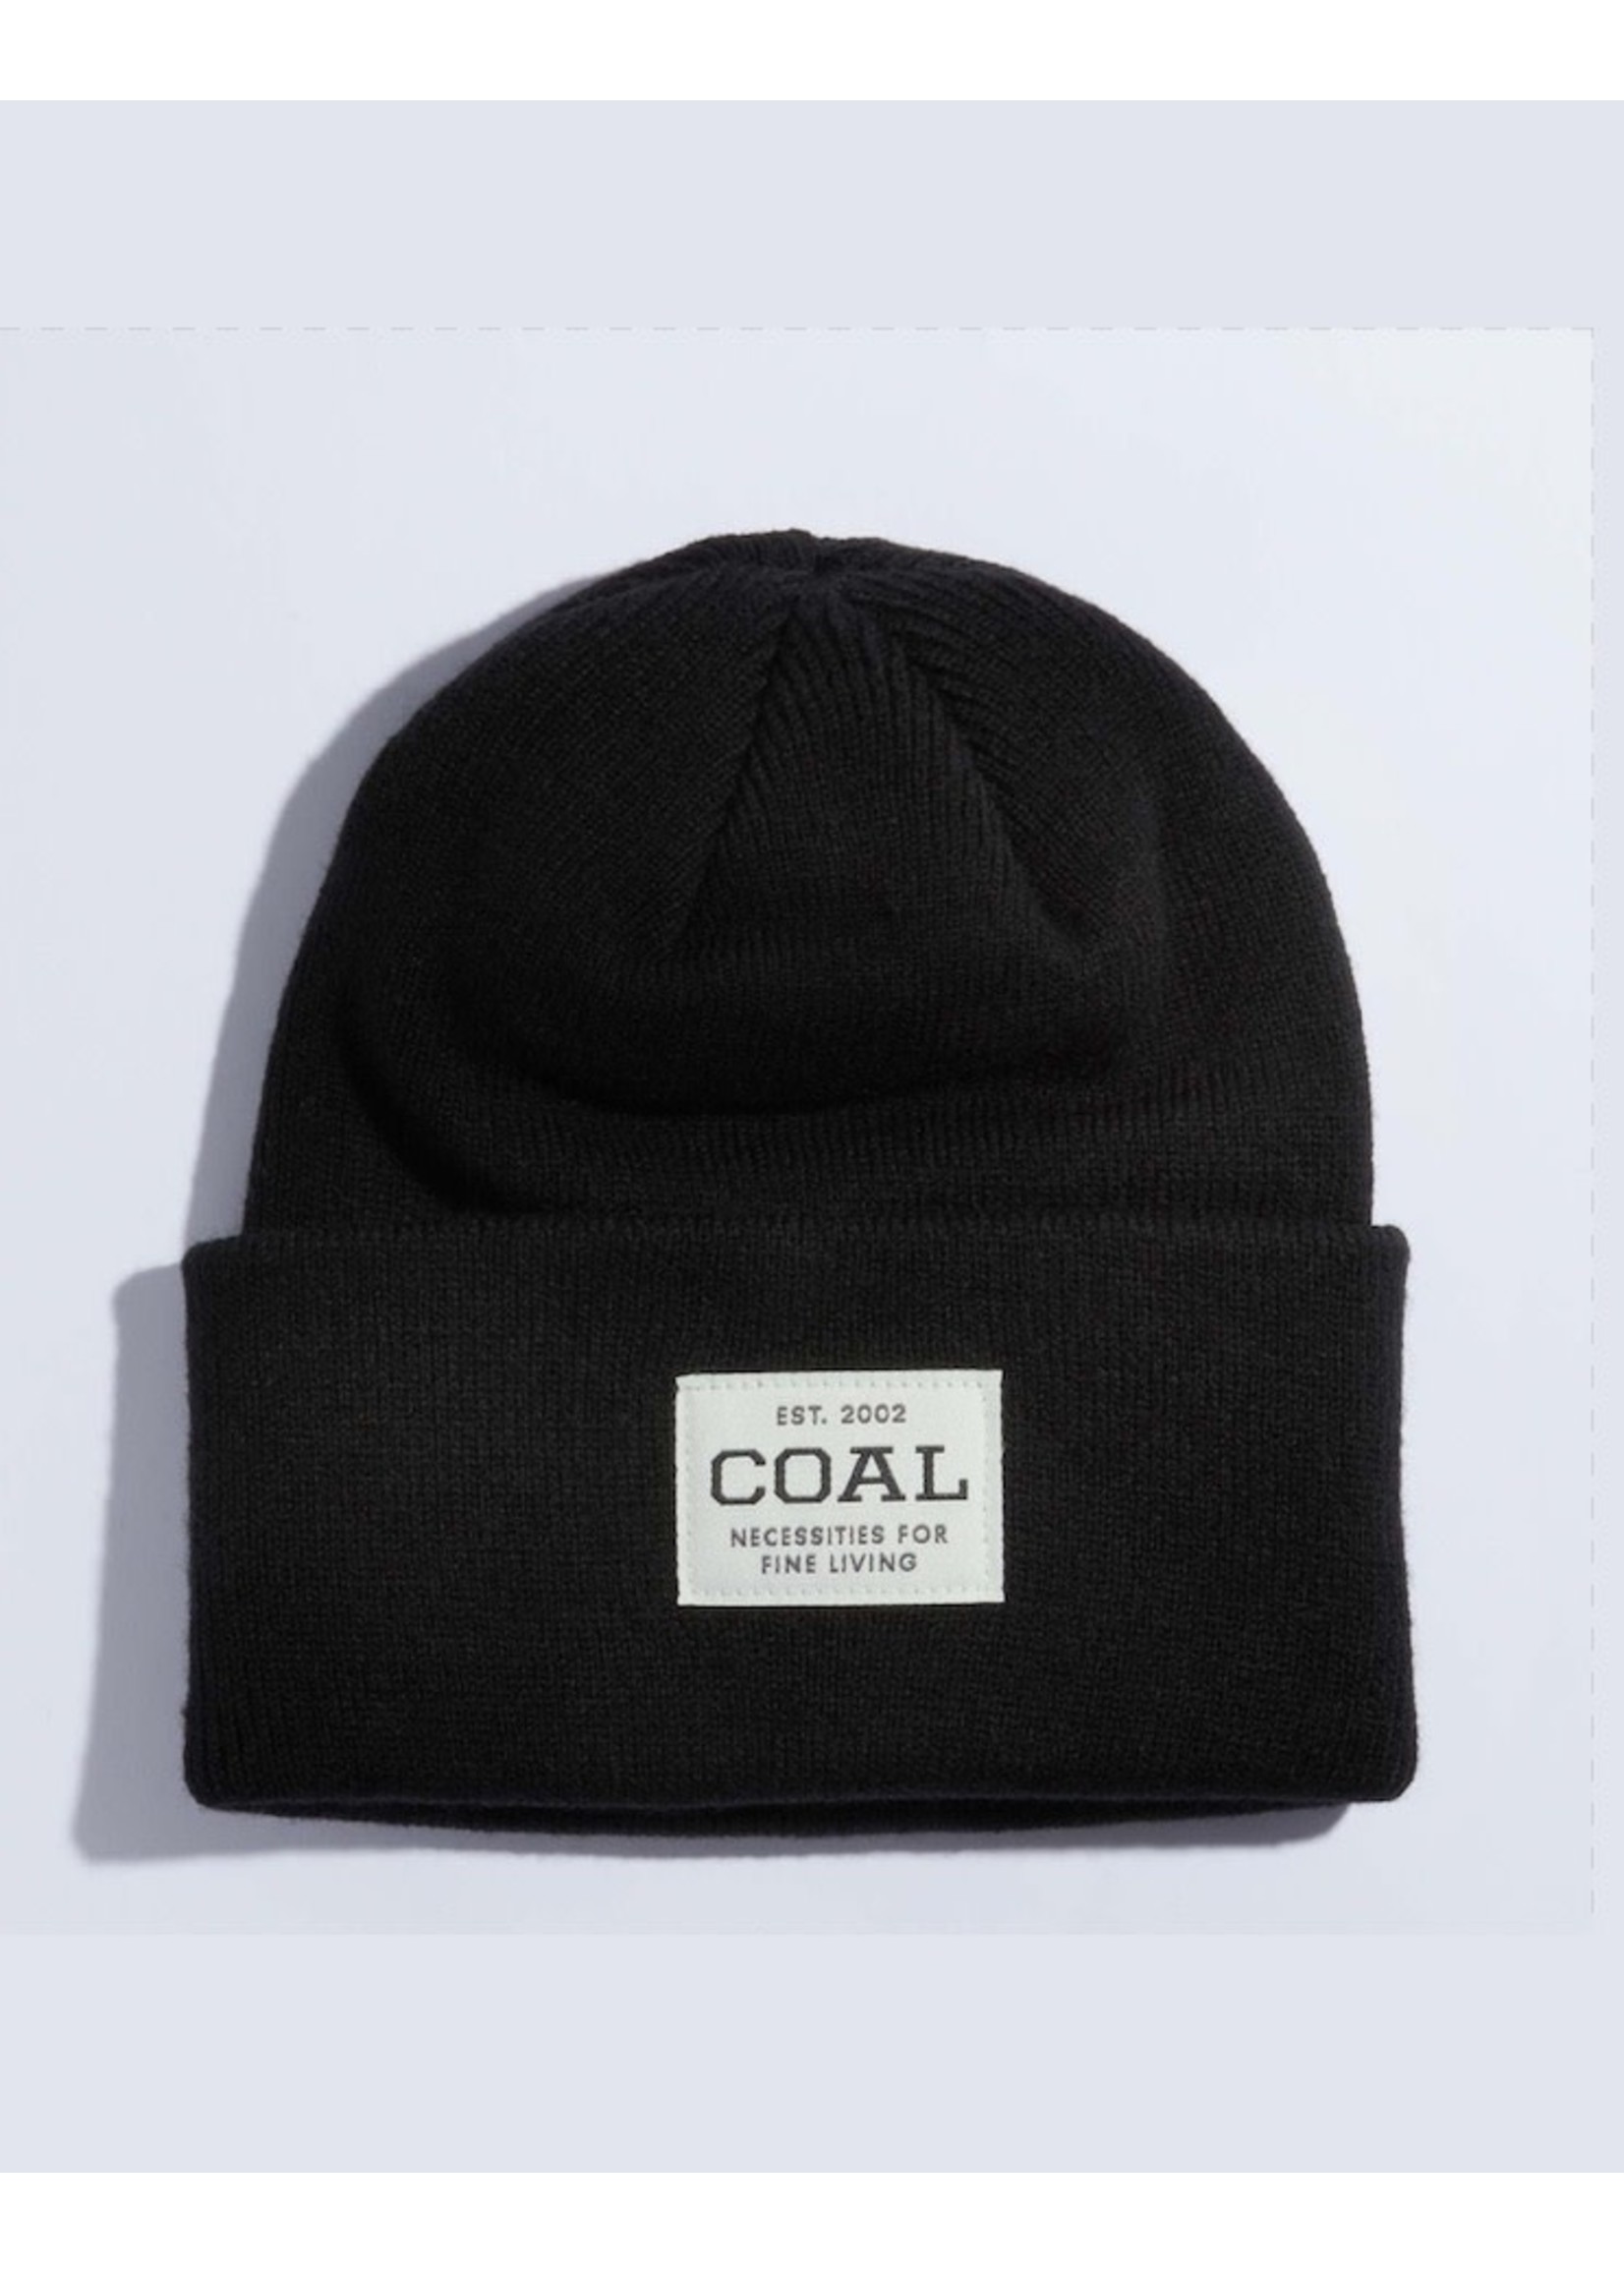 Coal Coal, The Uniform Kids Recycled Knit Cuff Beanie